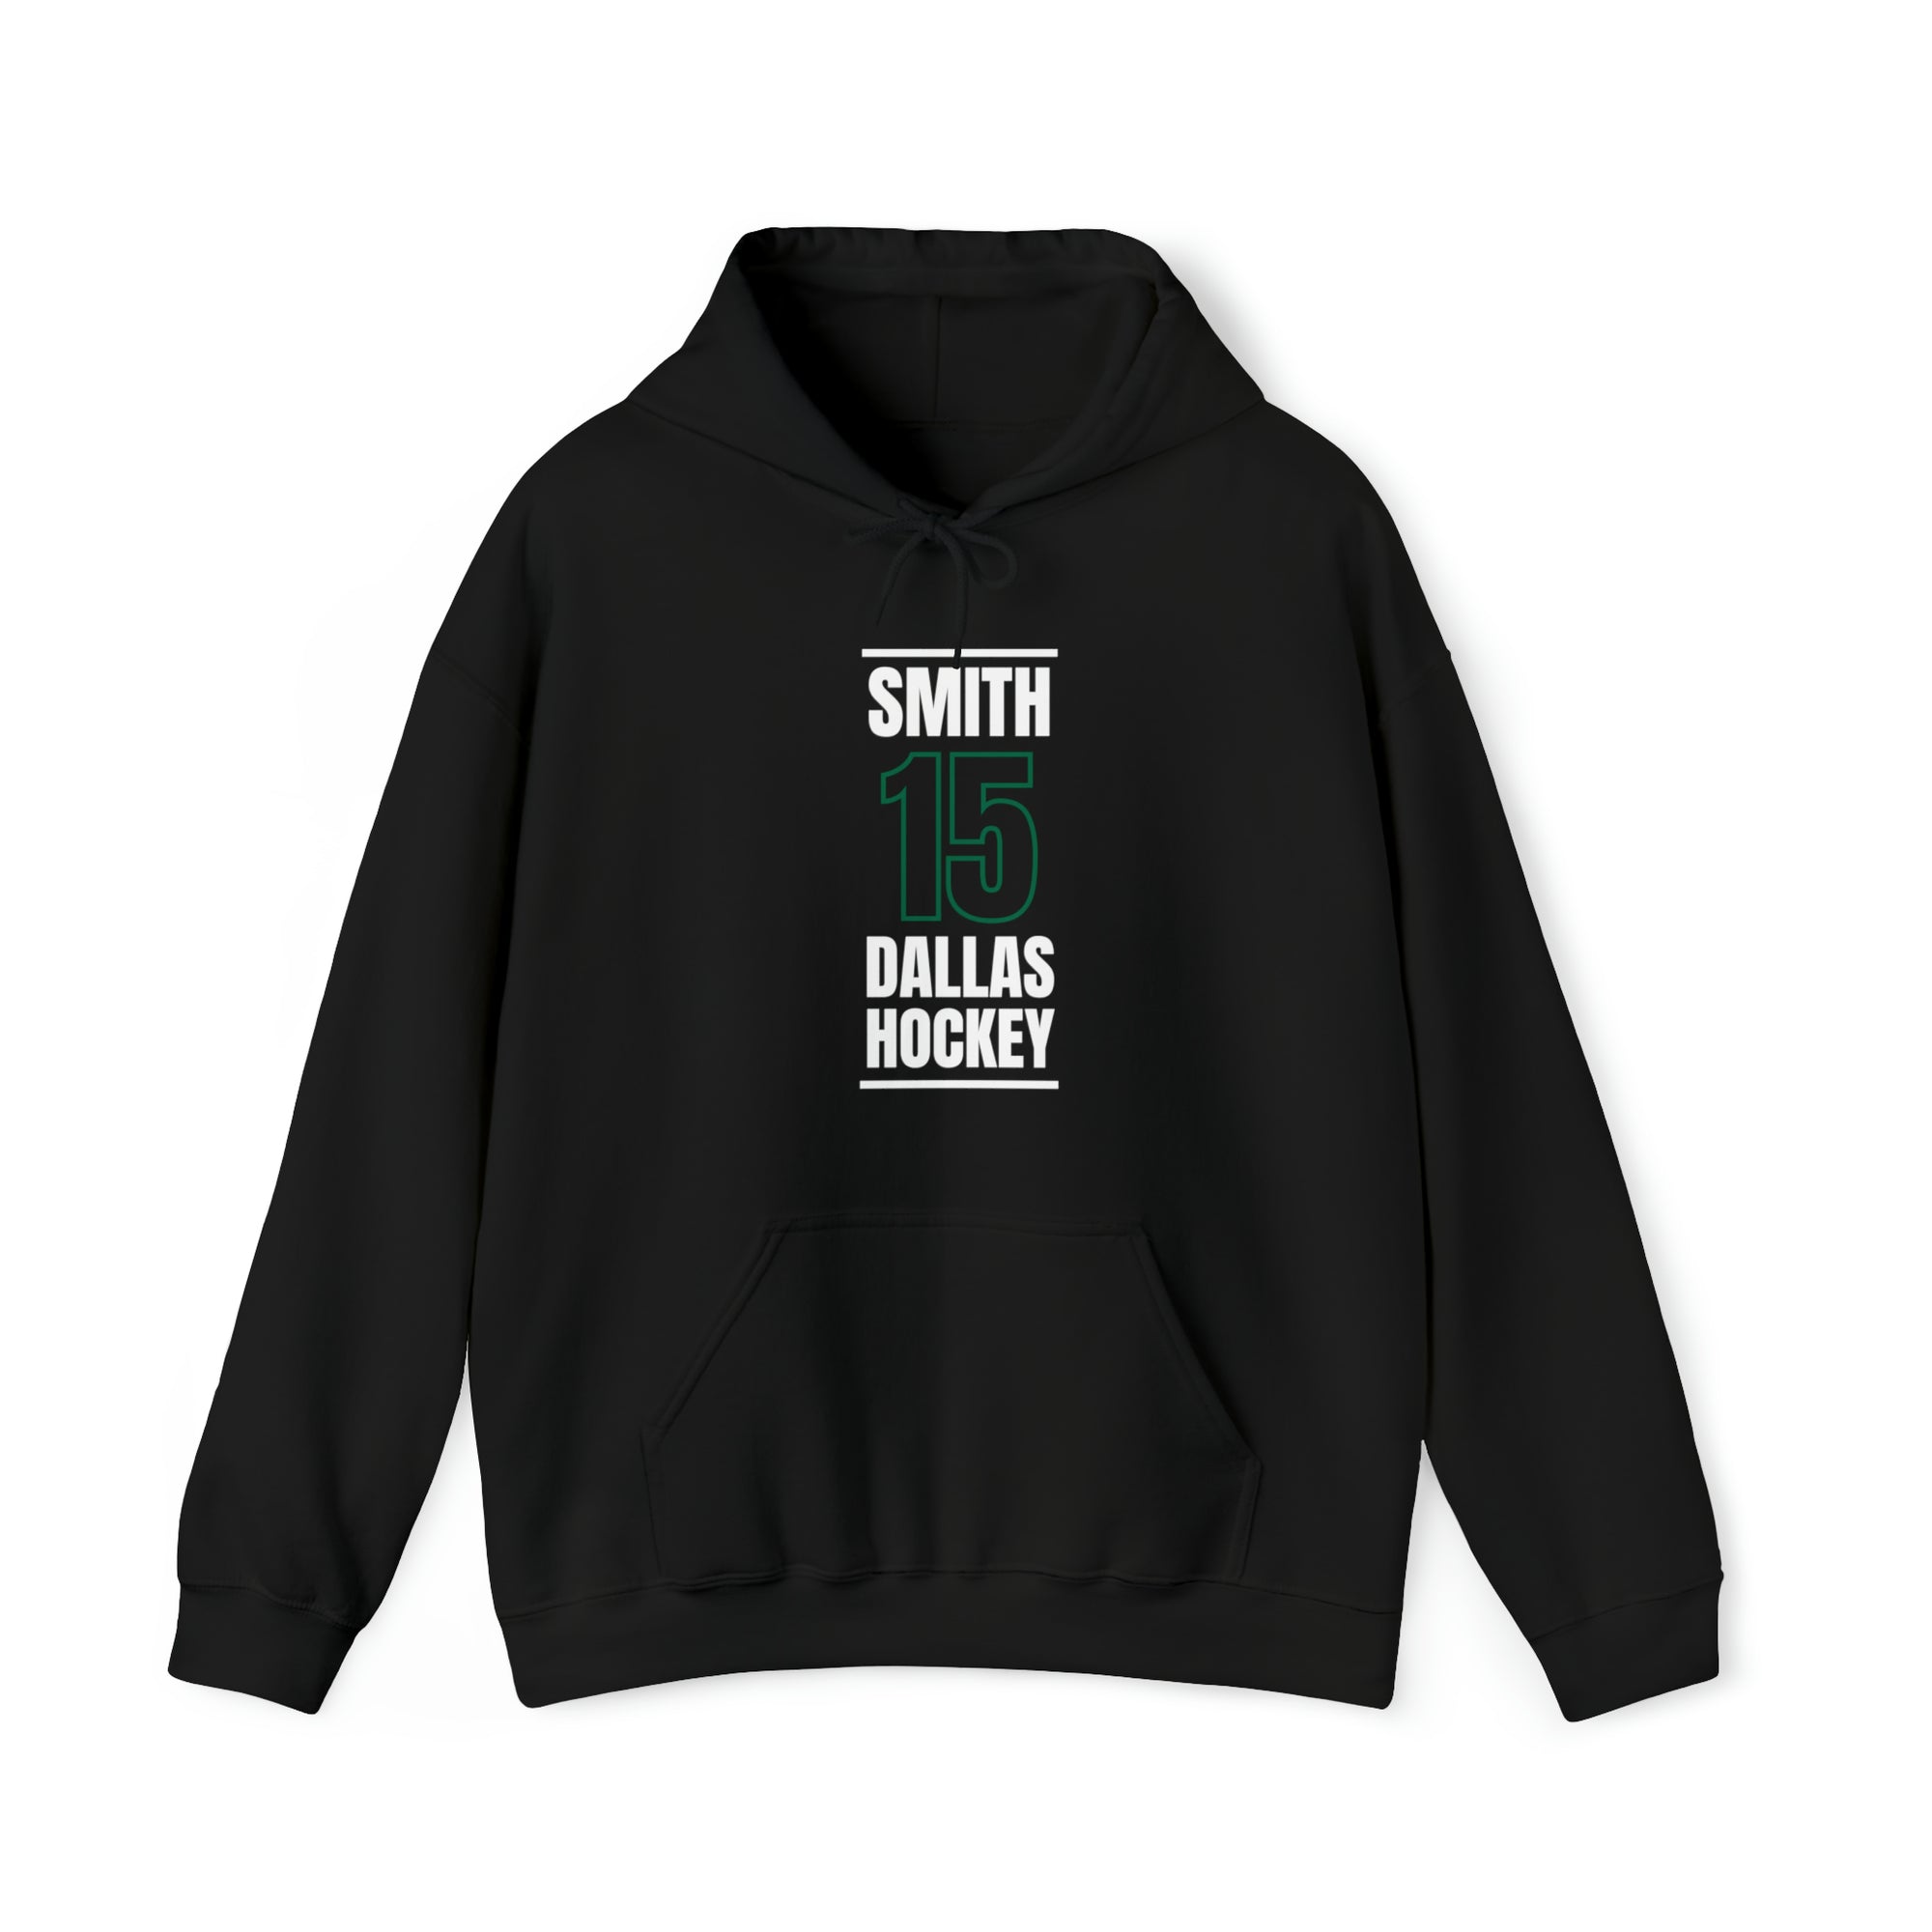 Smith 15 Dallas Hockey Black Vertical Design Unisex Hooded Sweatshirt